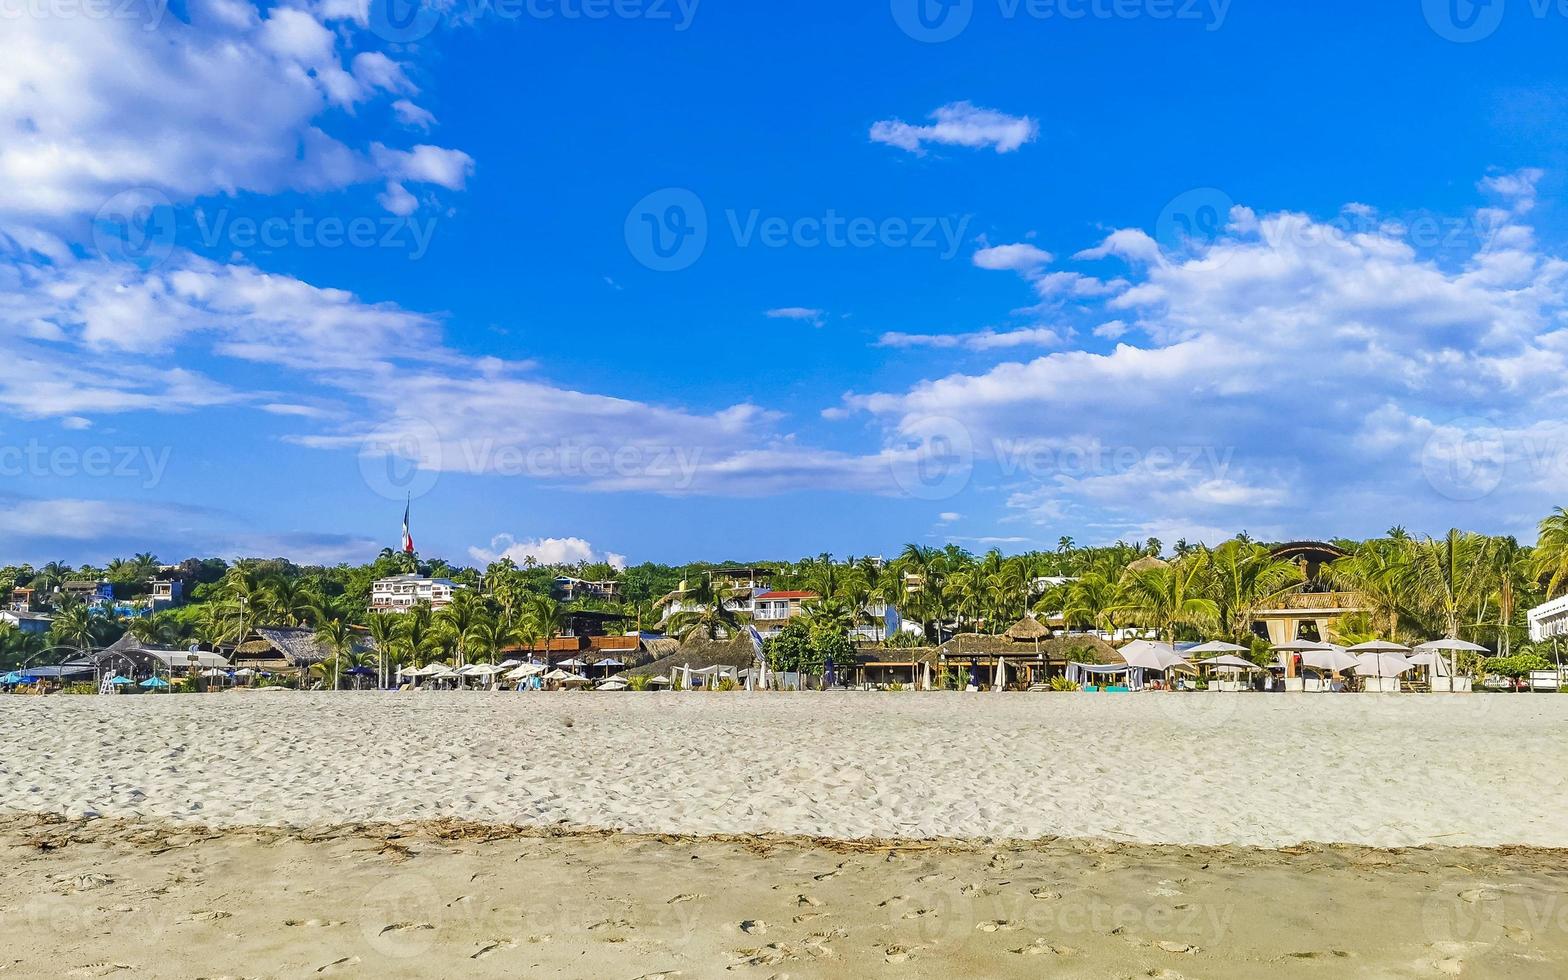 Palms parasols sun loungers beach resort Zicatela Puerto Escondido Mexico. photo